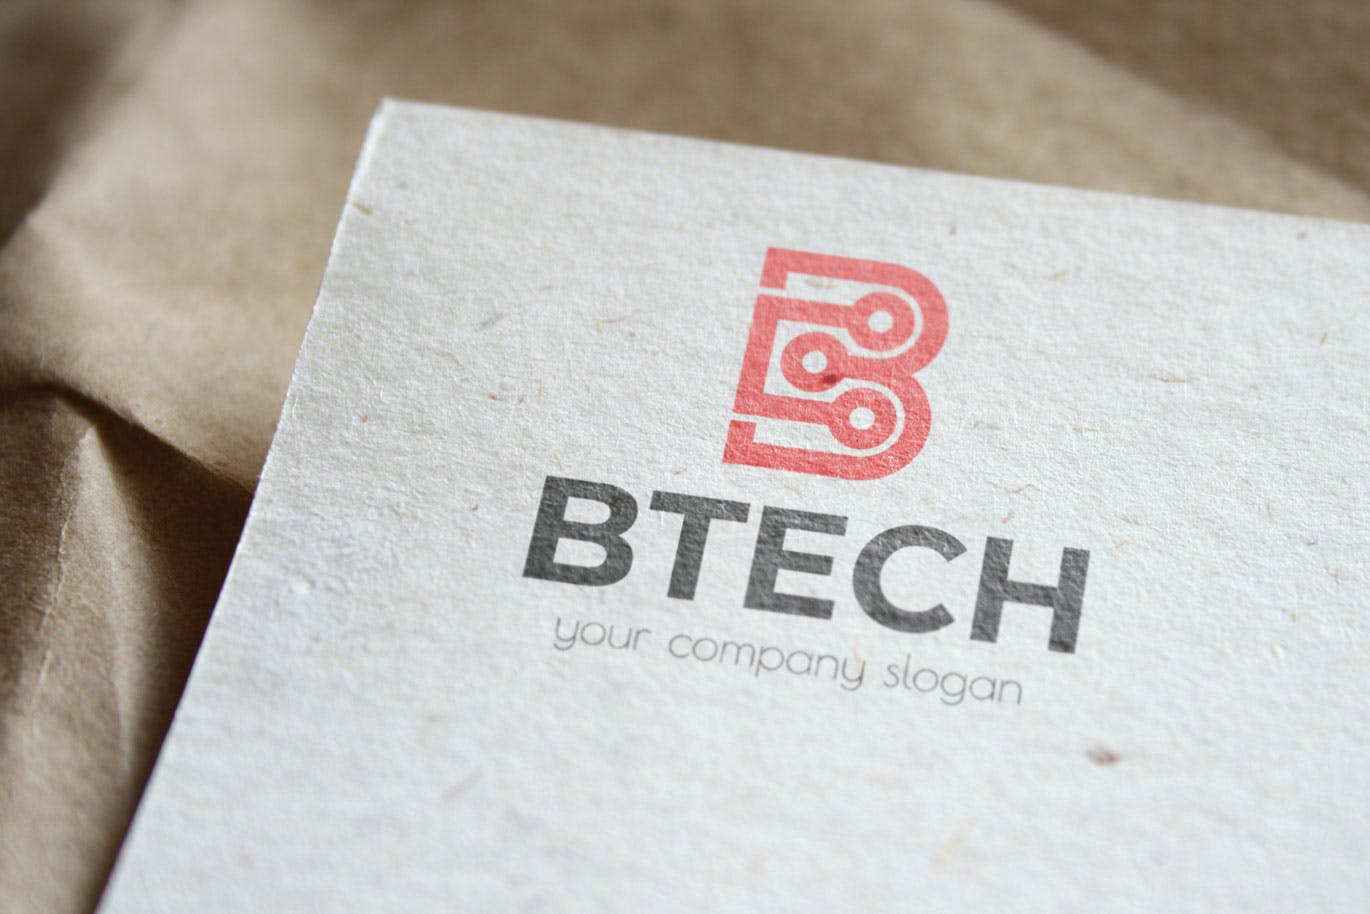 基于B字母图形的企业Logo设计蚂蚁素材精选模板 Letter Based Business Logo Template插图(3)